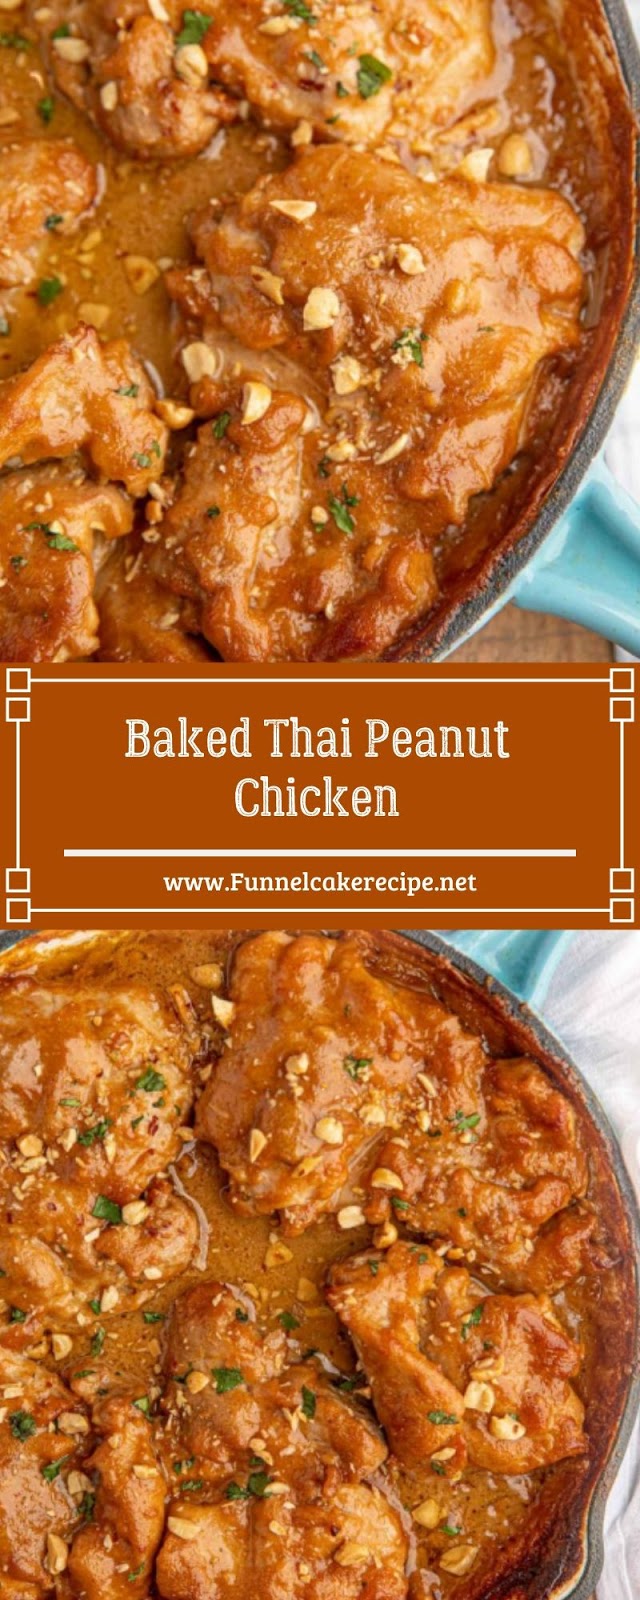 Baked Thai Peanut Chicken